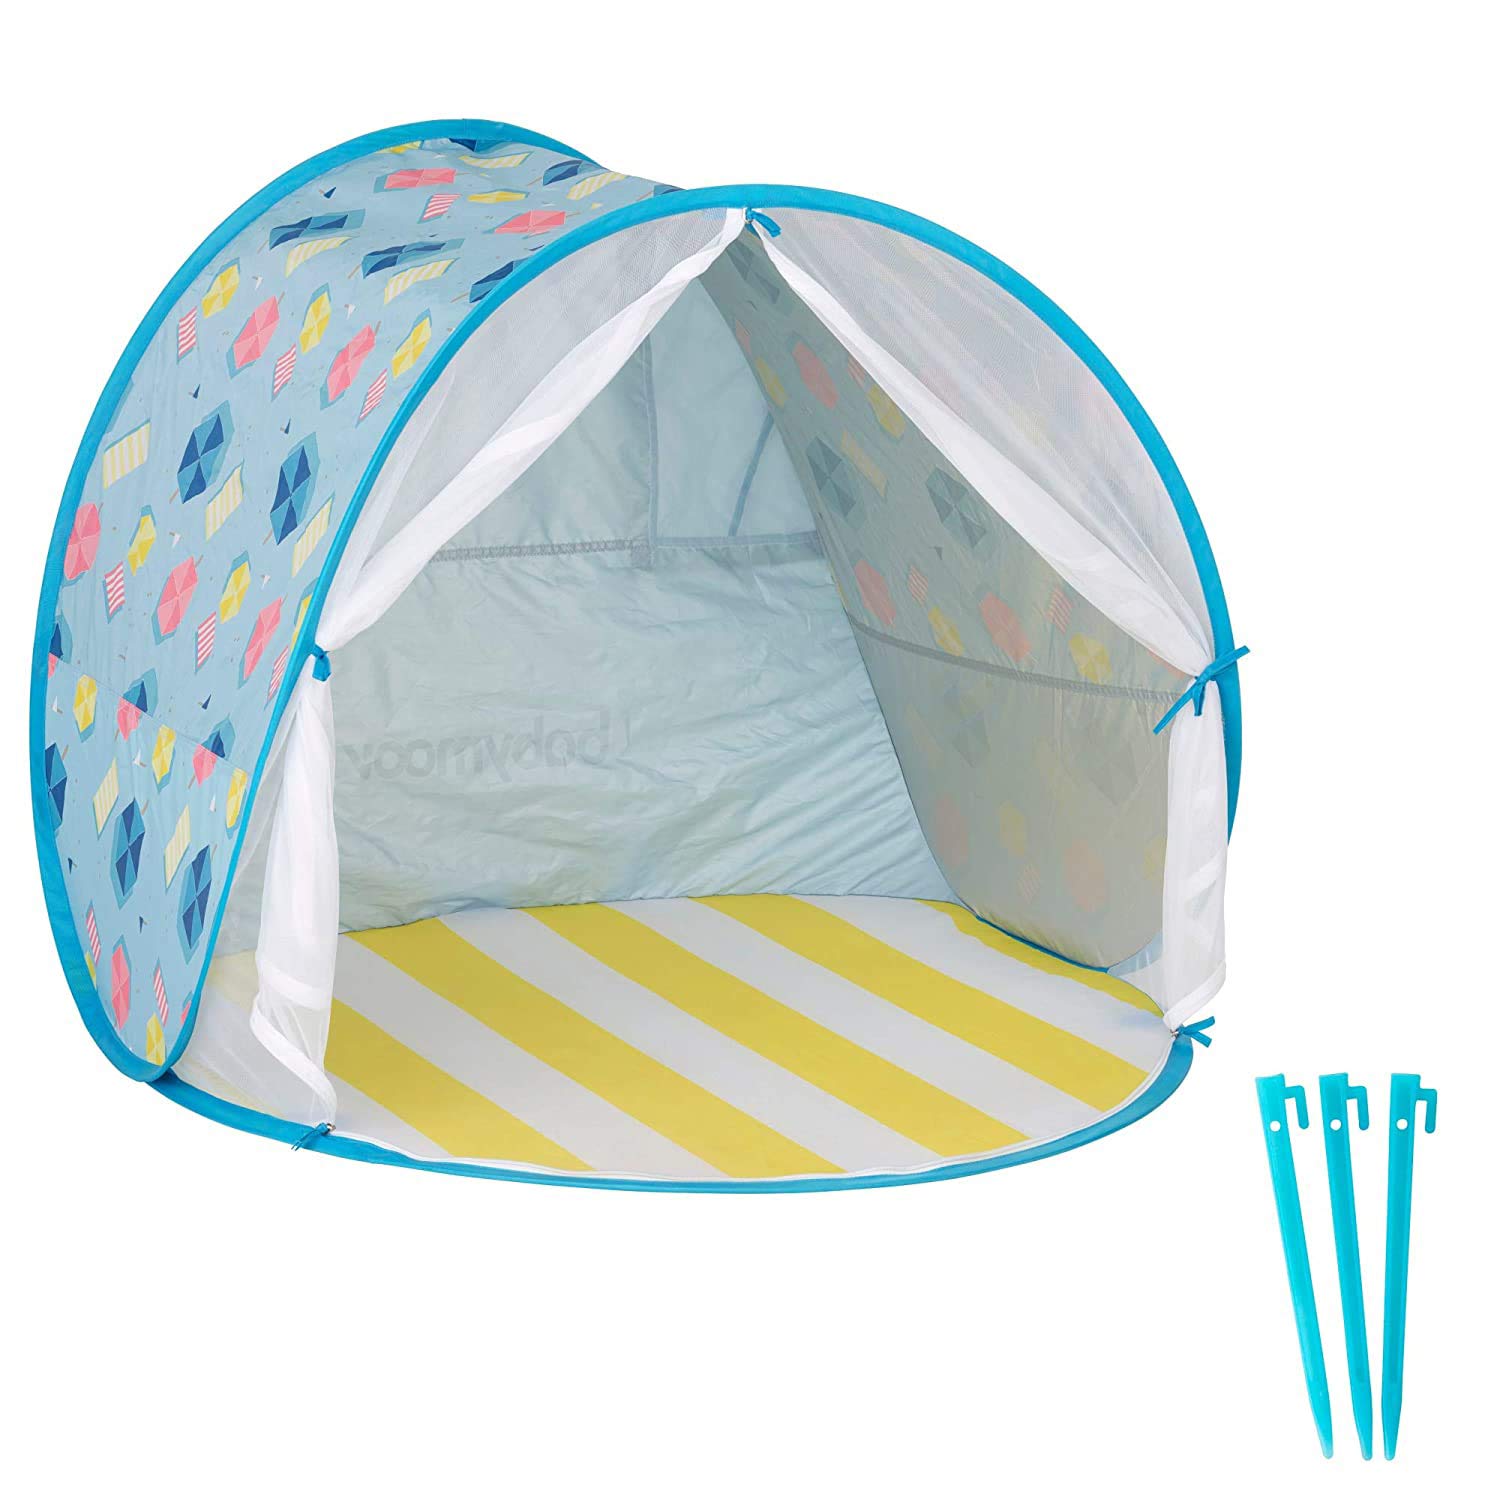 Anti-UV Parasol Pop Up Outdoor Tent *OPEN BOX*